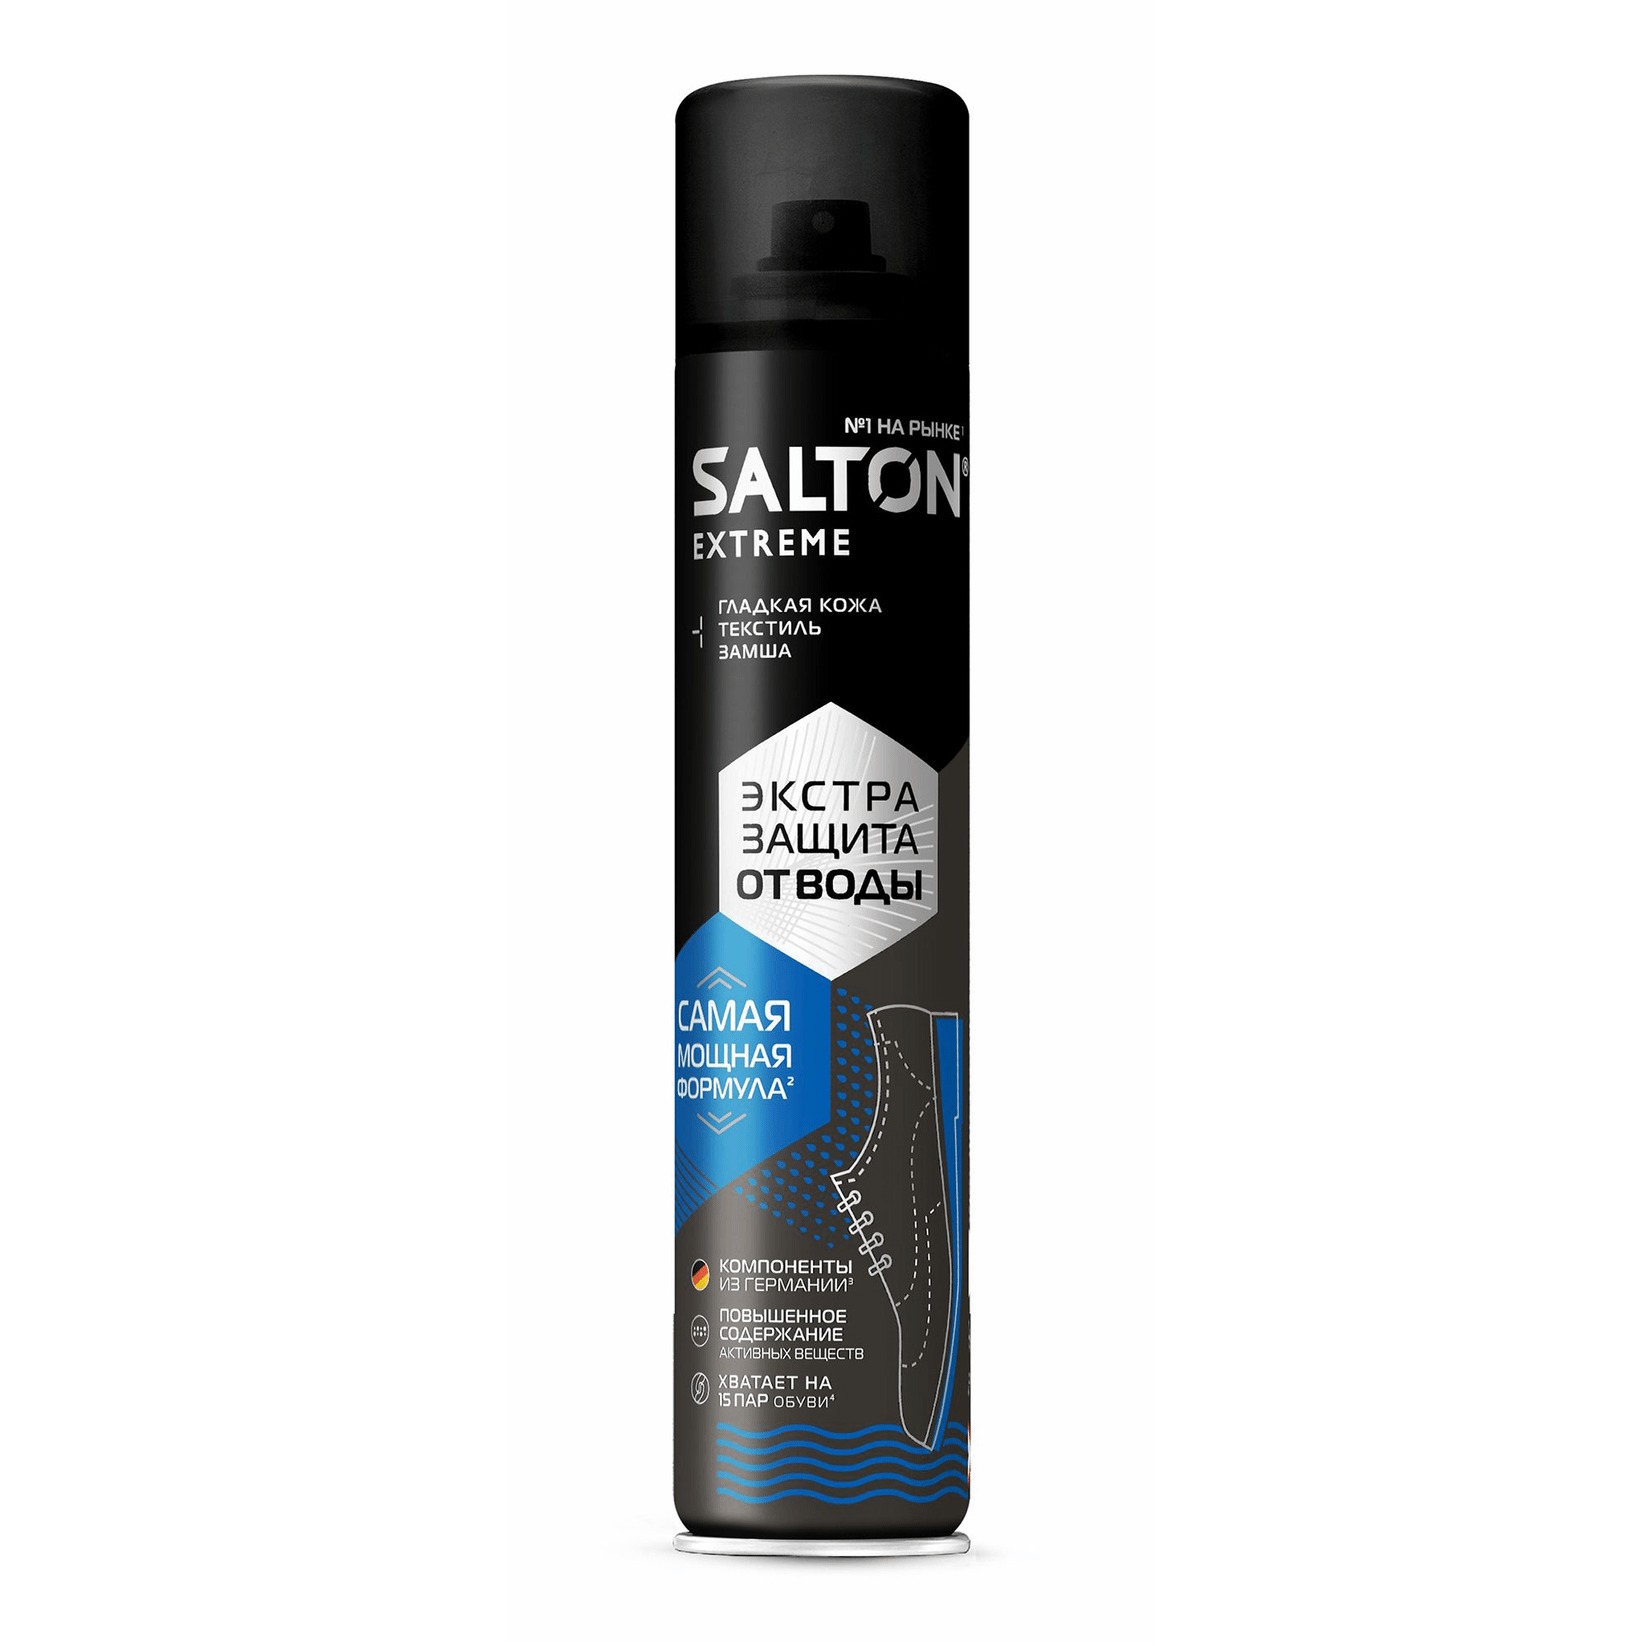 Защита Salton Экстра от воды 190 мл экстра защита от воды salton expert для всех видов кожи и текстиля 250 мл